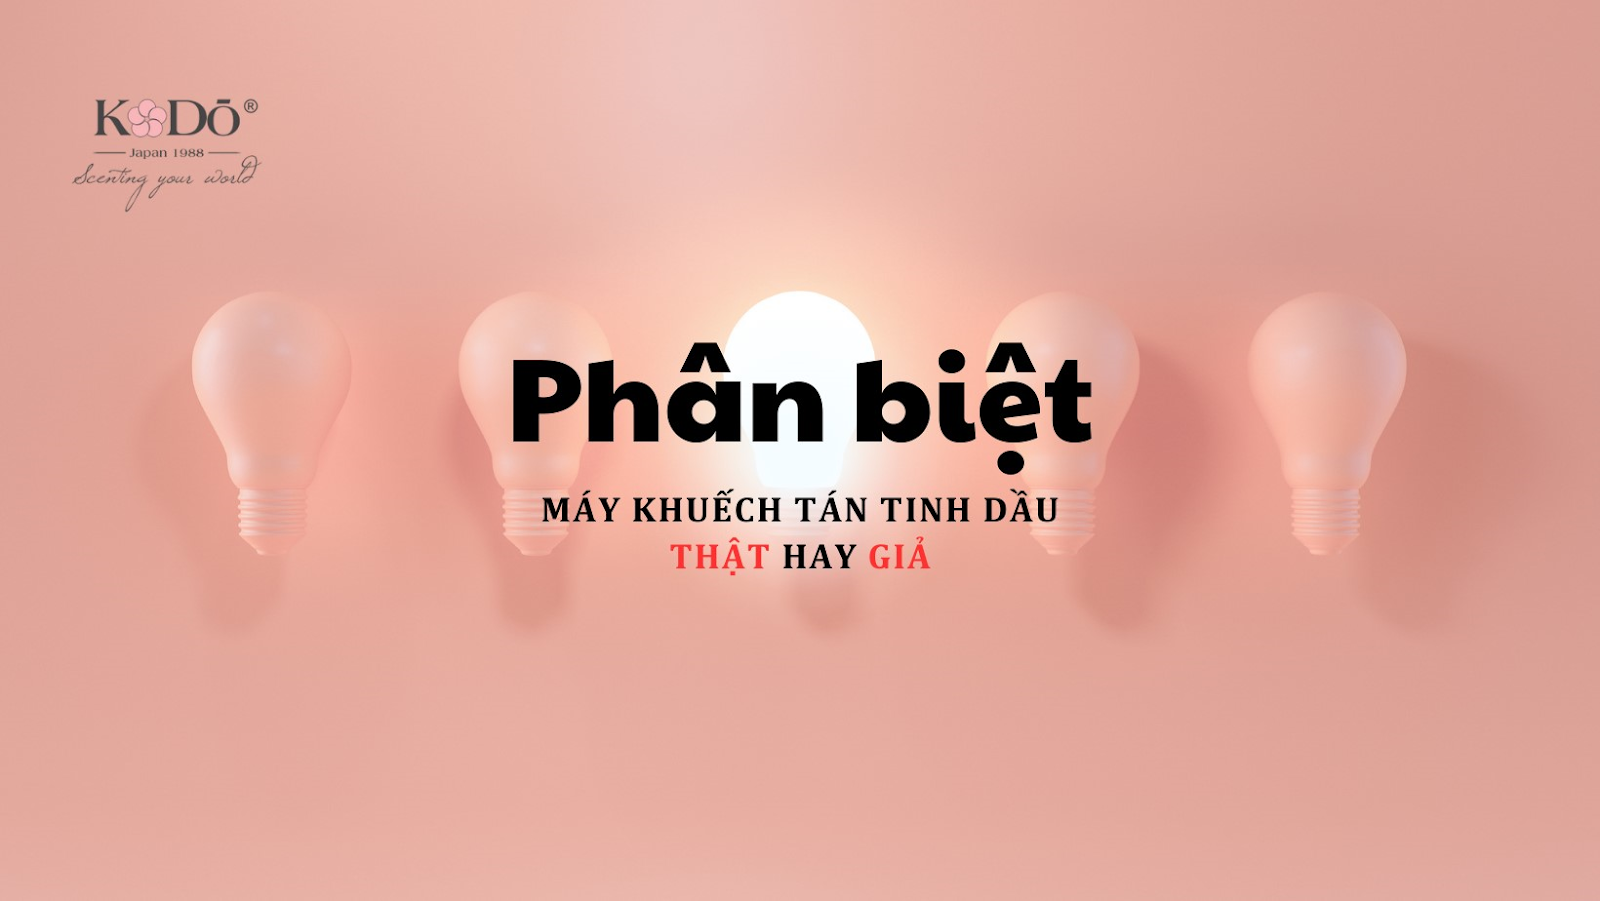 phan-biet-giua-may-khuech-tan-tinh-dau-chinh-hang-va-hang-nhai-1